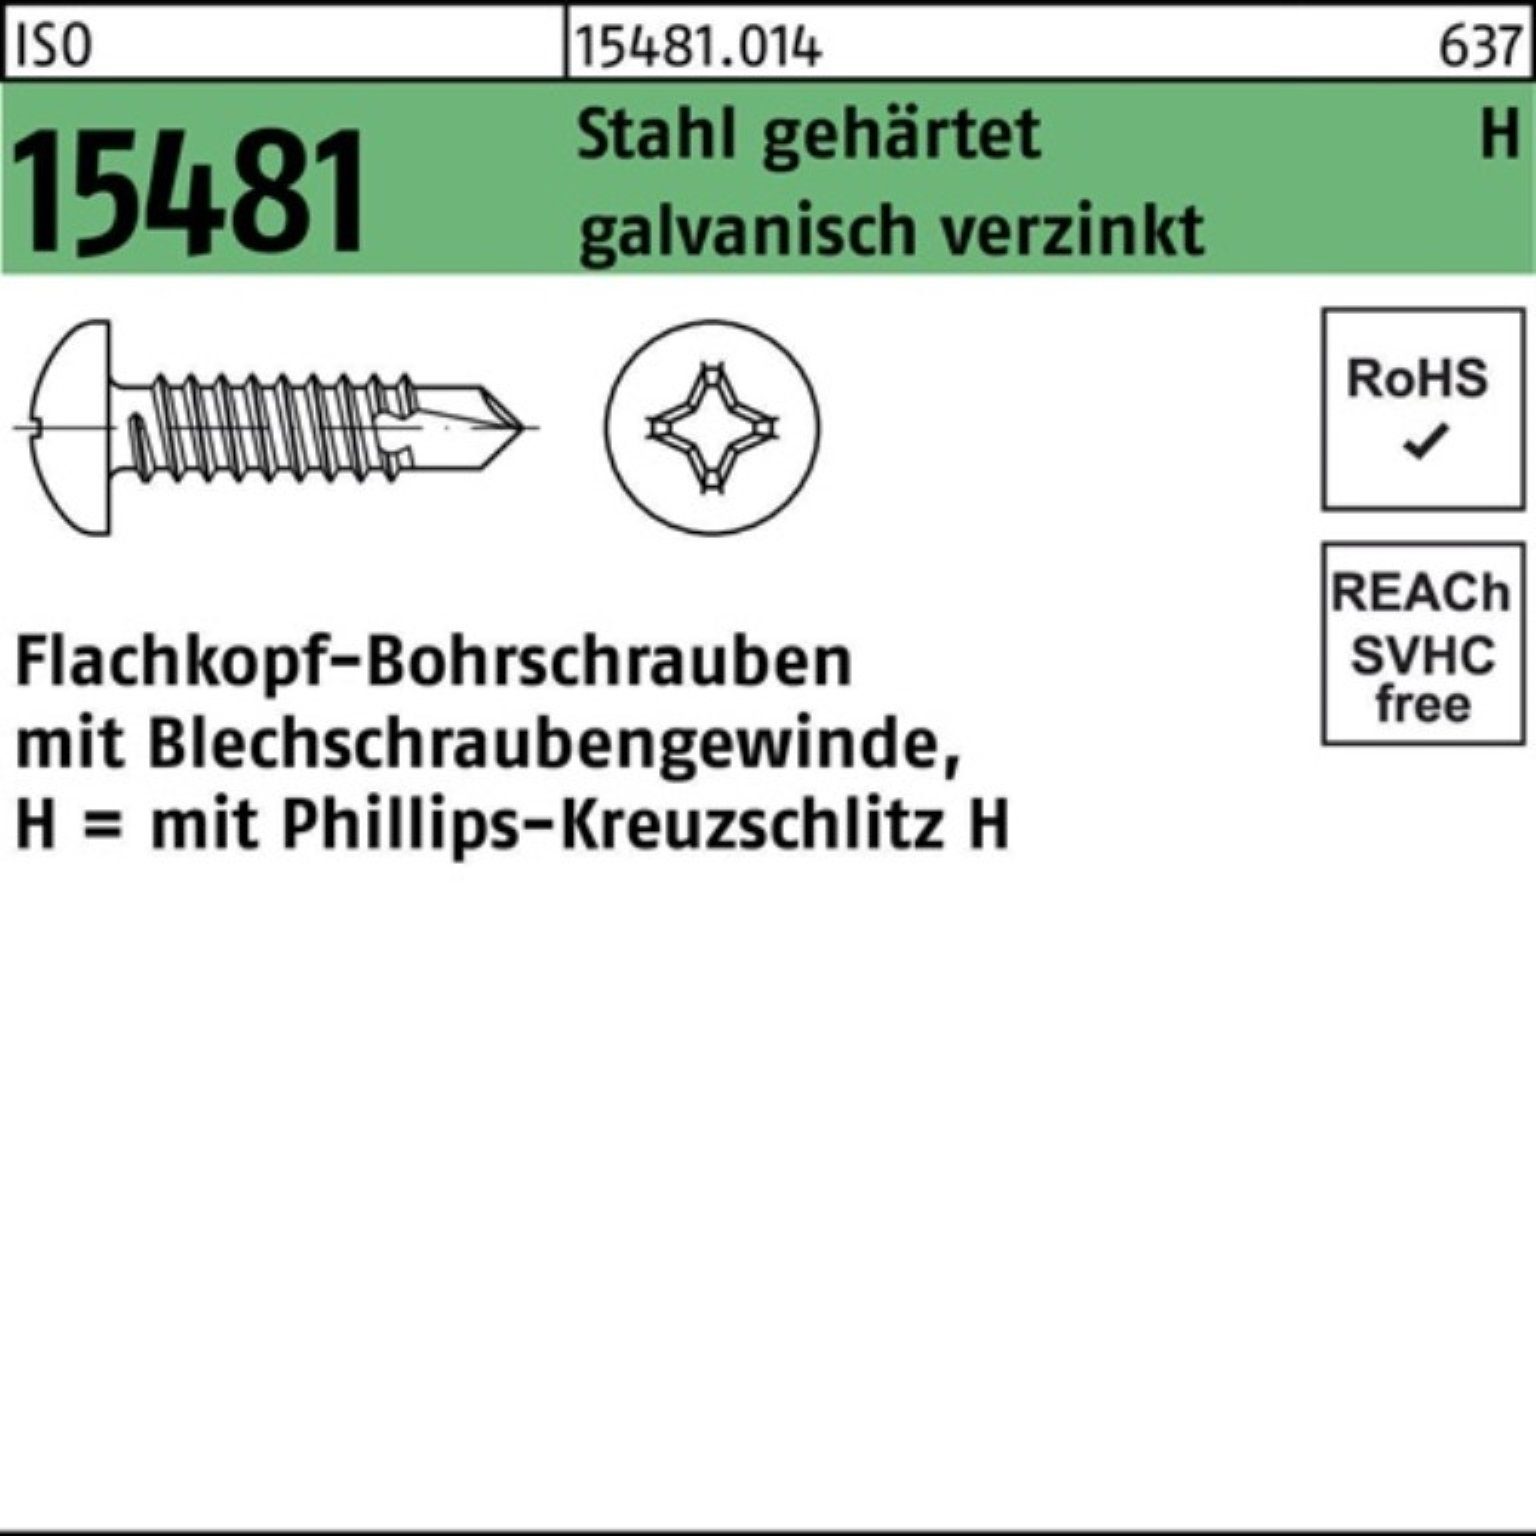 ST 1000er PH Bohrschraube 3,5x22-H 15481 Reyher Pack FLAKObohrschraube ISO Stahl gehärtet